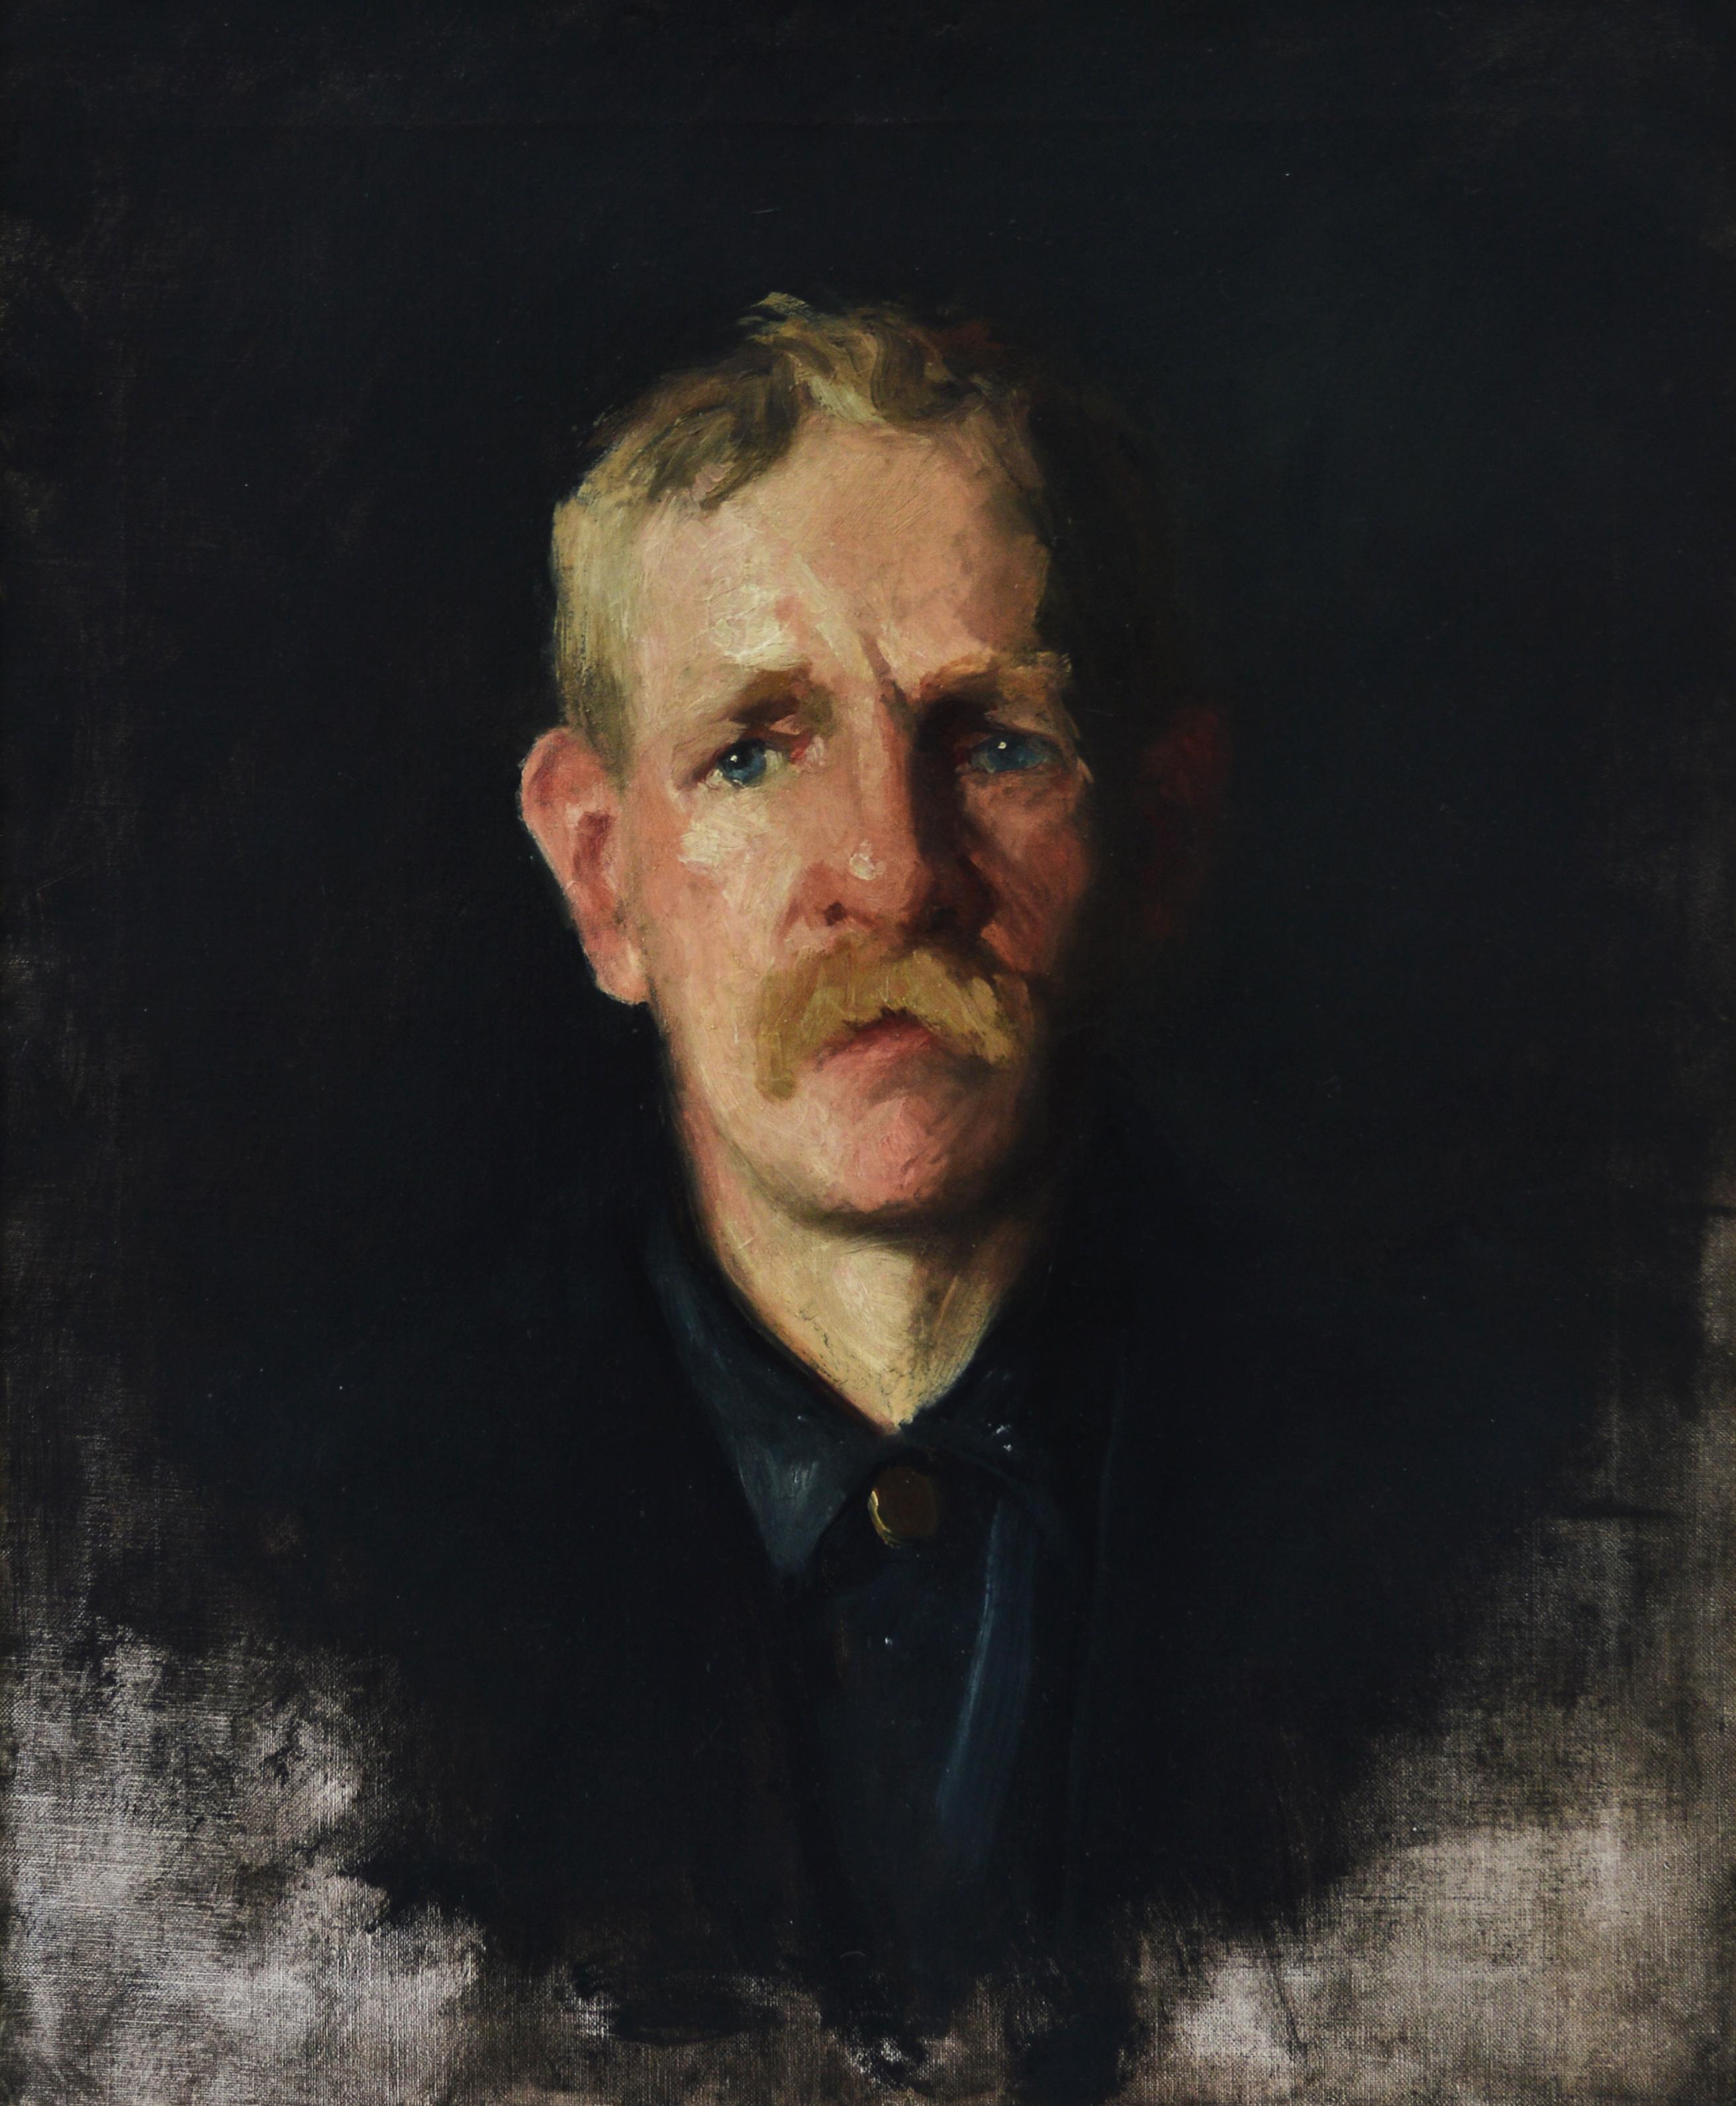 Portrait of a Blonde Man  - Painting by Frank Duveneck